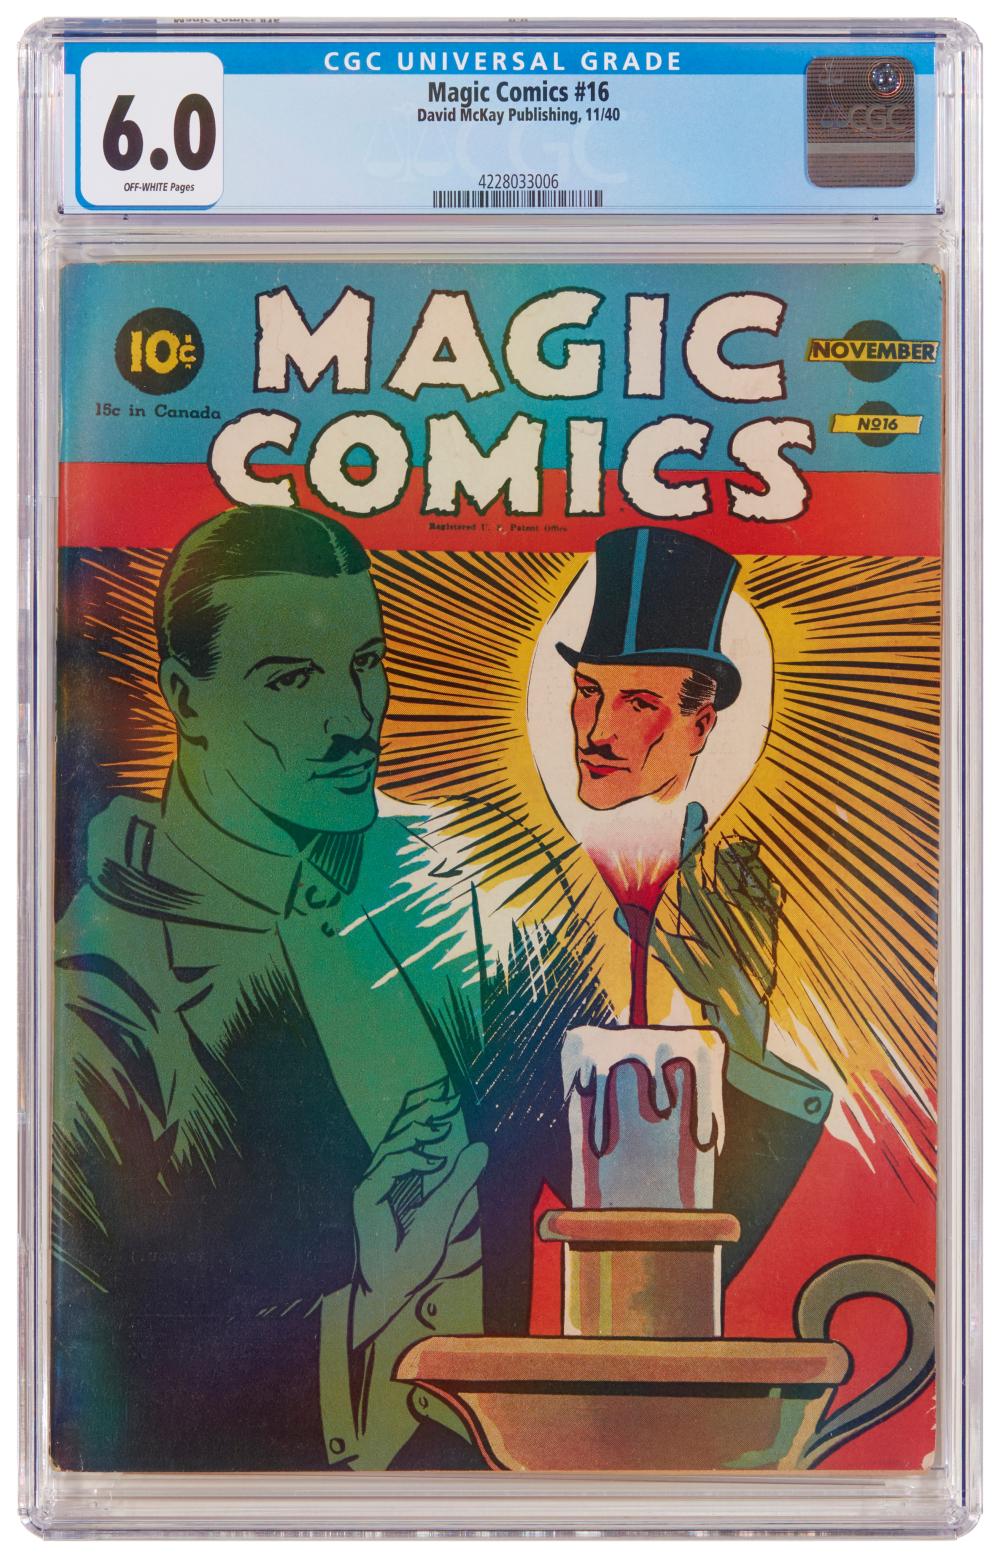 MAGIC COMICS #16 (DAVID MCKAY PUBLISHING,